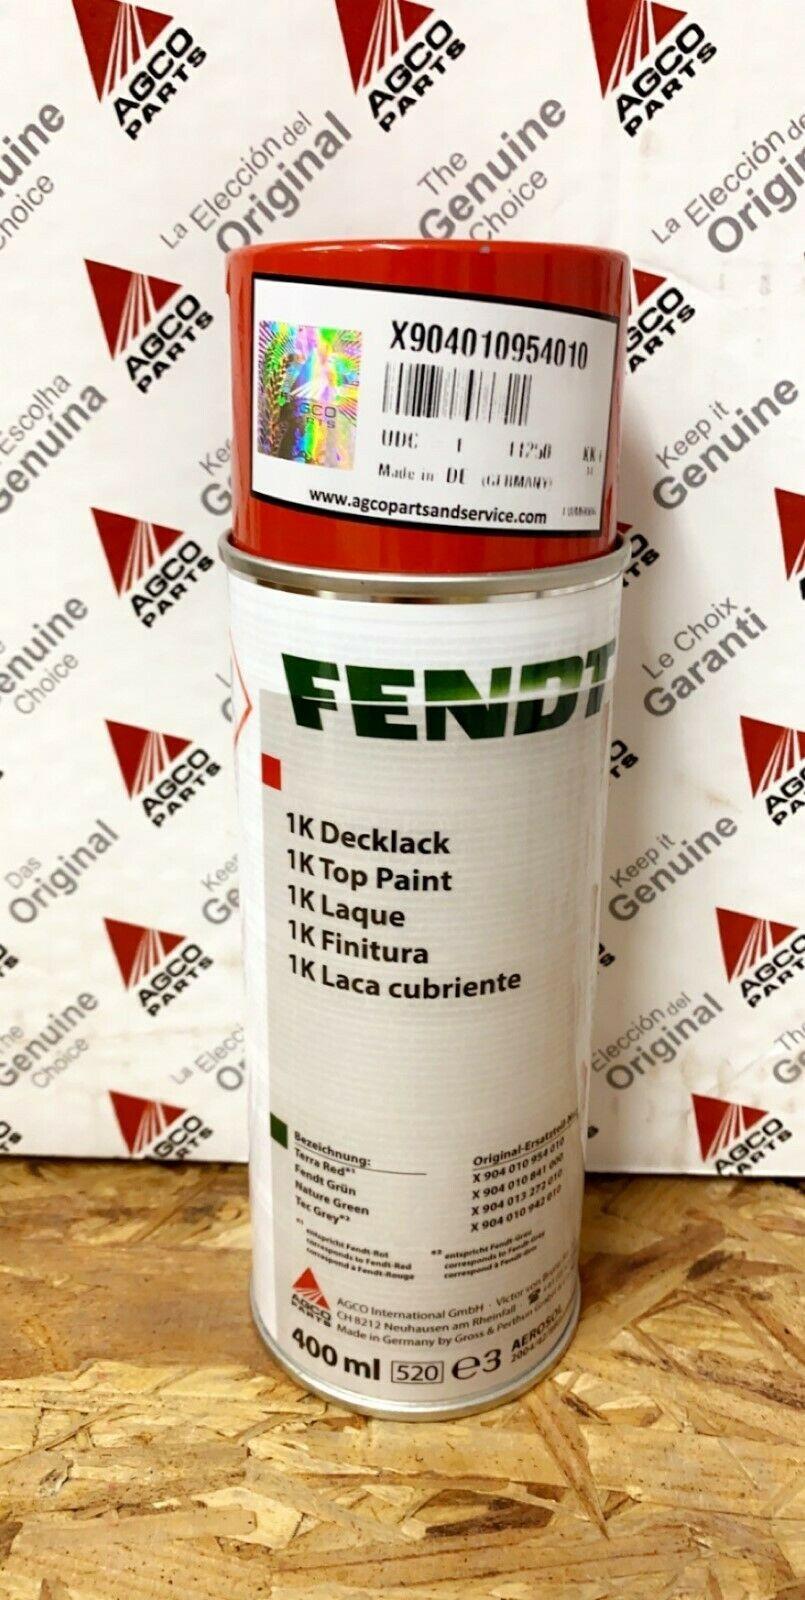 Fendt Red Paint Aerosol 400ml - X904010954010